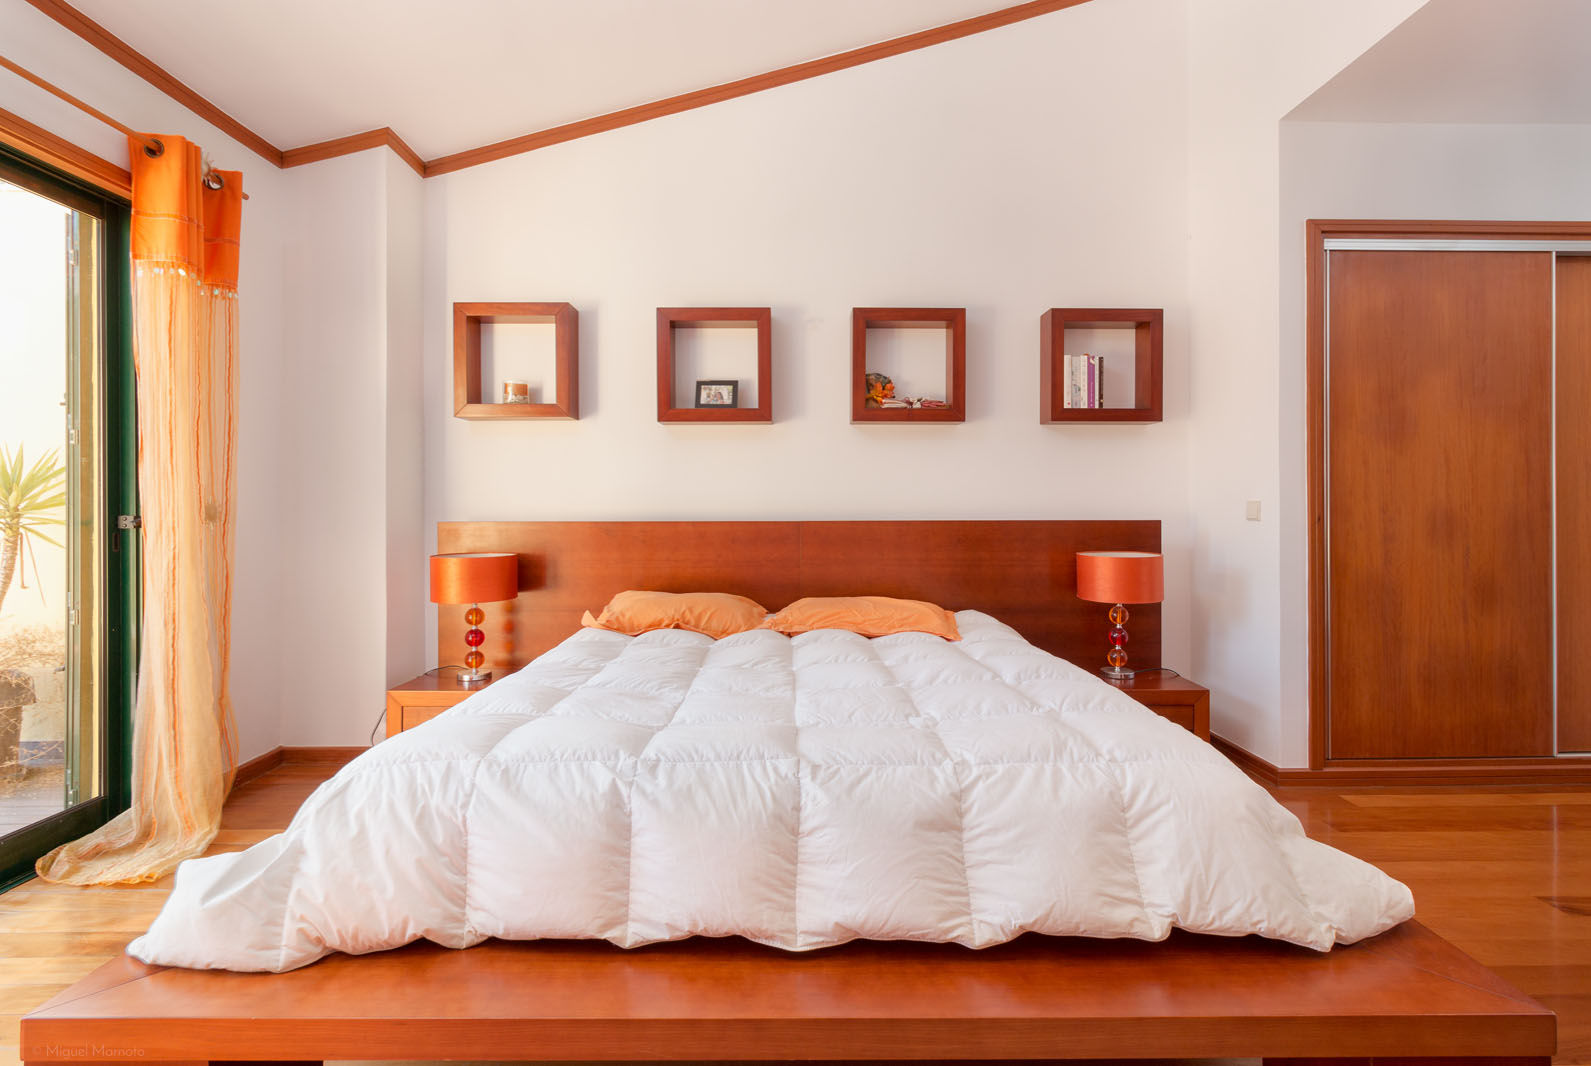 Moradia Mira Villas, Miguel Marnoto - Fotografia Miguel Marnoto - Fotografia Modern style bedroom